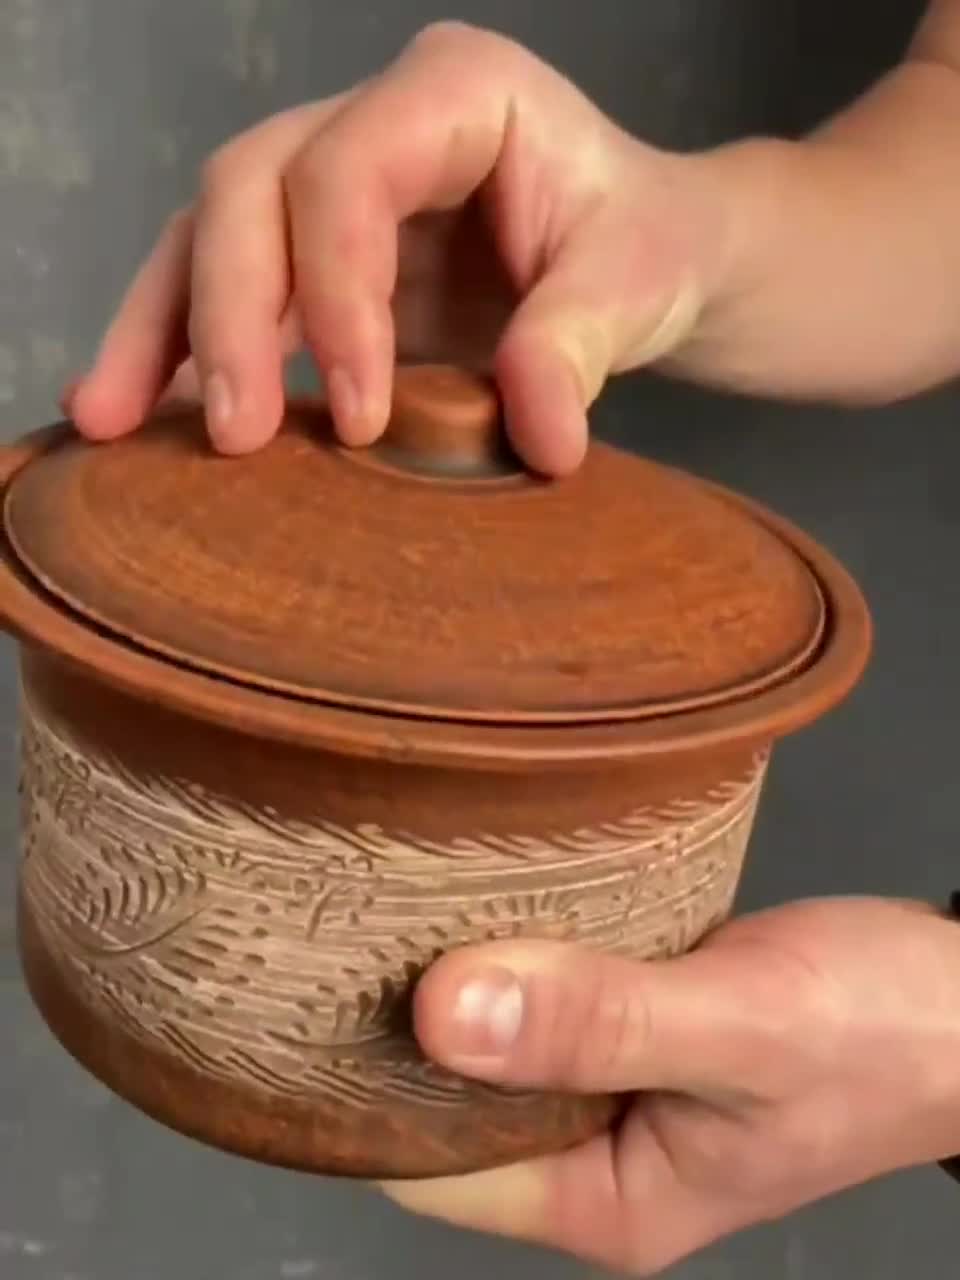 https://v.etsystatic.com/video/upload/q_auto/77_Handmade_Red_Clay_Pot_Ceramic_Baking_Pan_Clay_Cooking_Saucepan_Organic_Ceramics_Casserole_Cooker_for_Dutch_Oven_jtw6yb.jpg